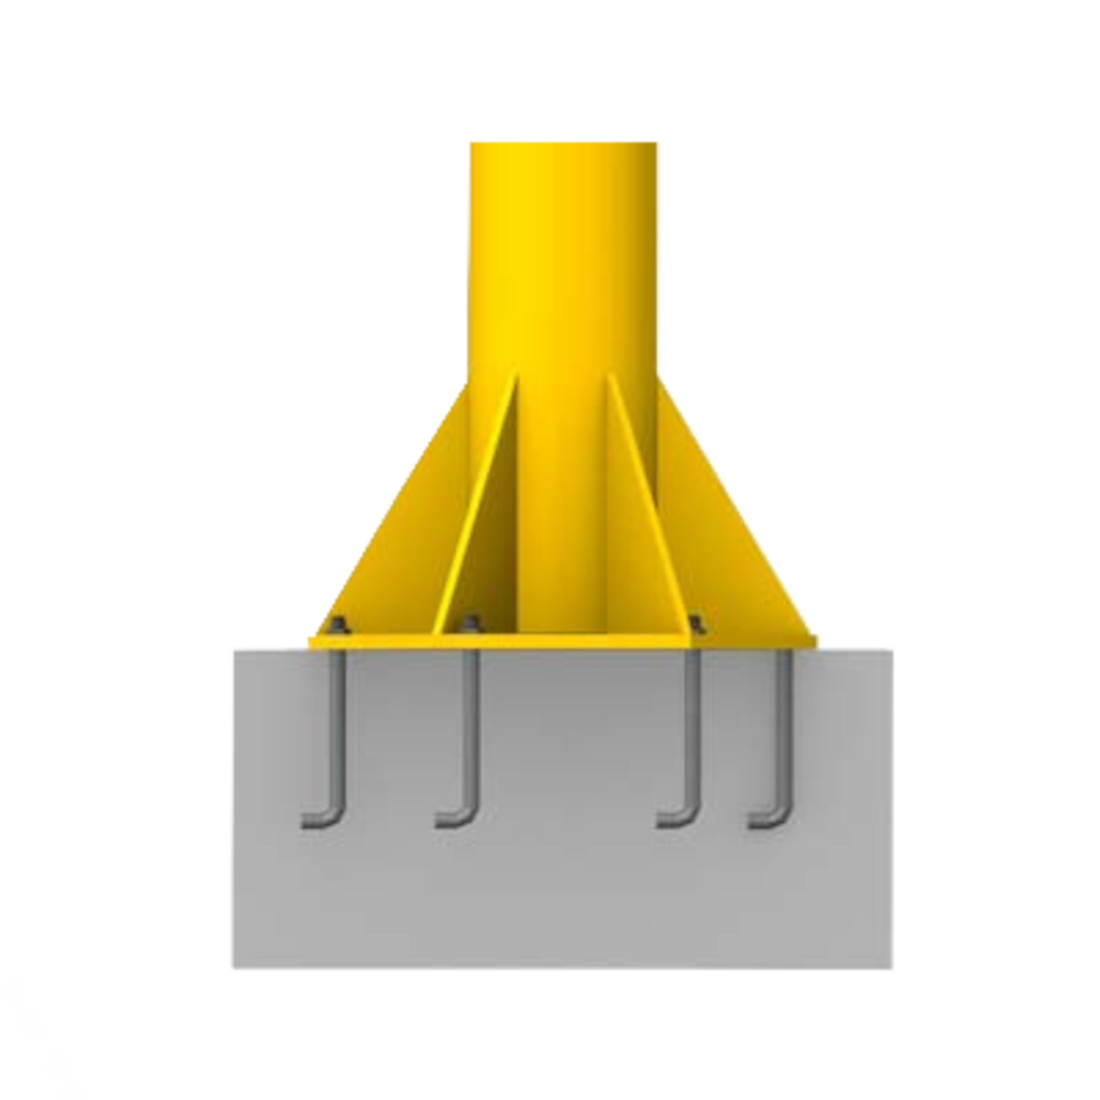 Anchor Bolt Kits Illustration (Hexagonal Baseplate Cranes)